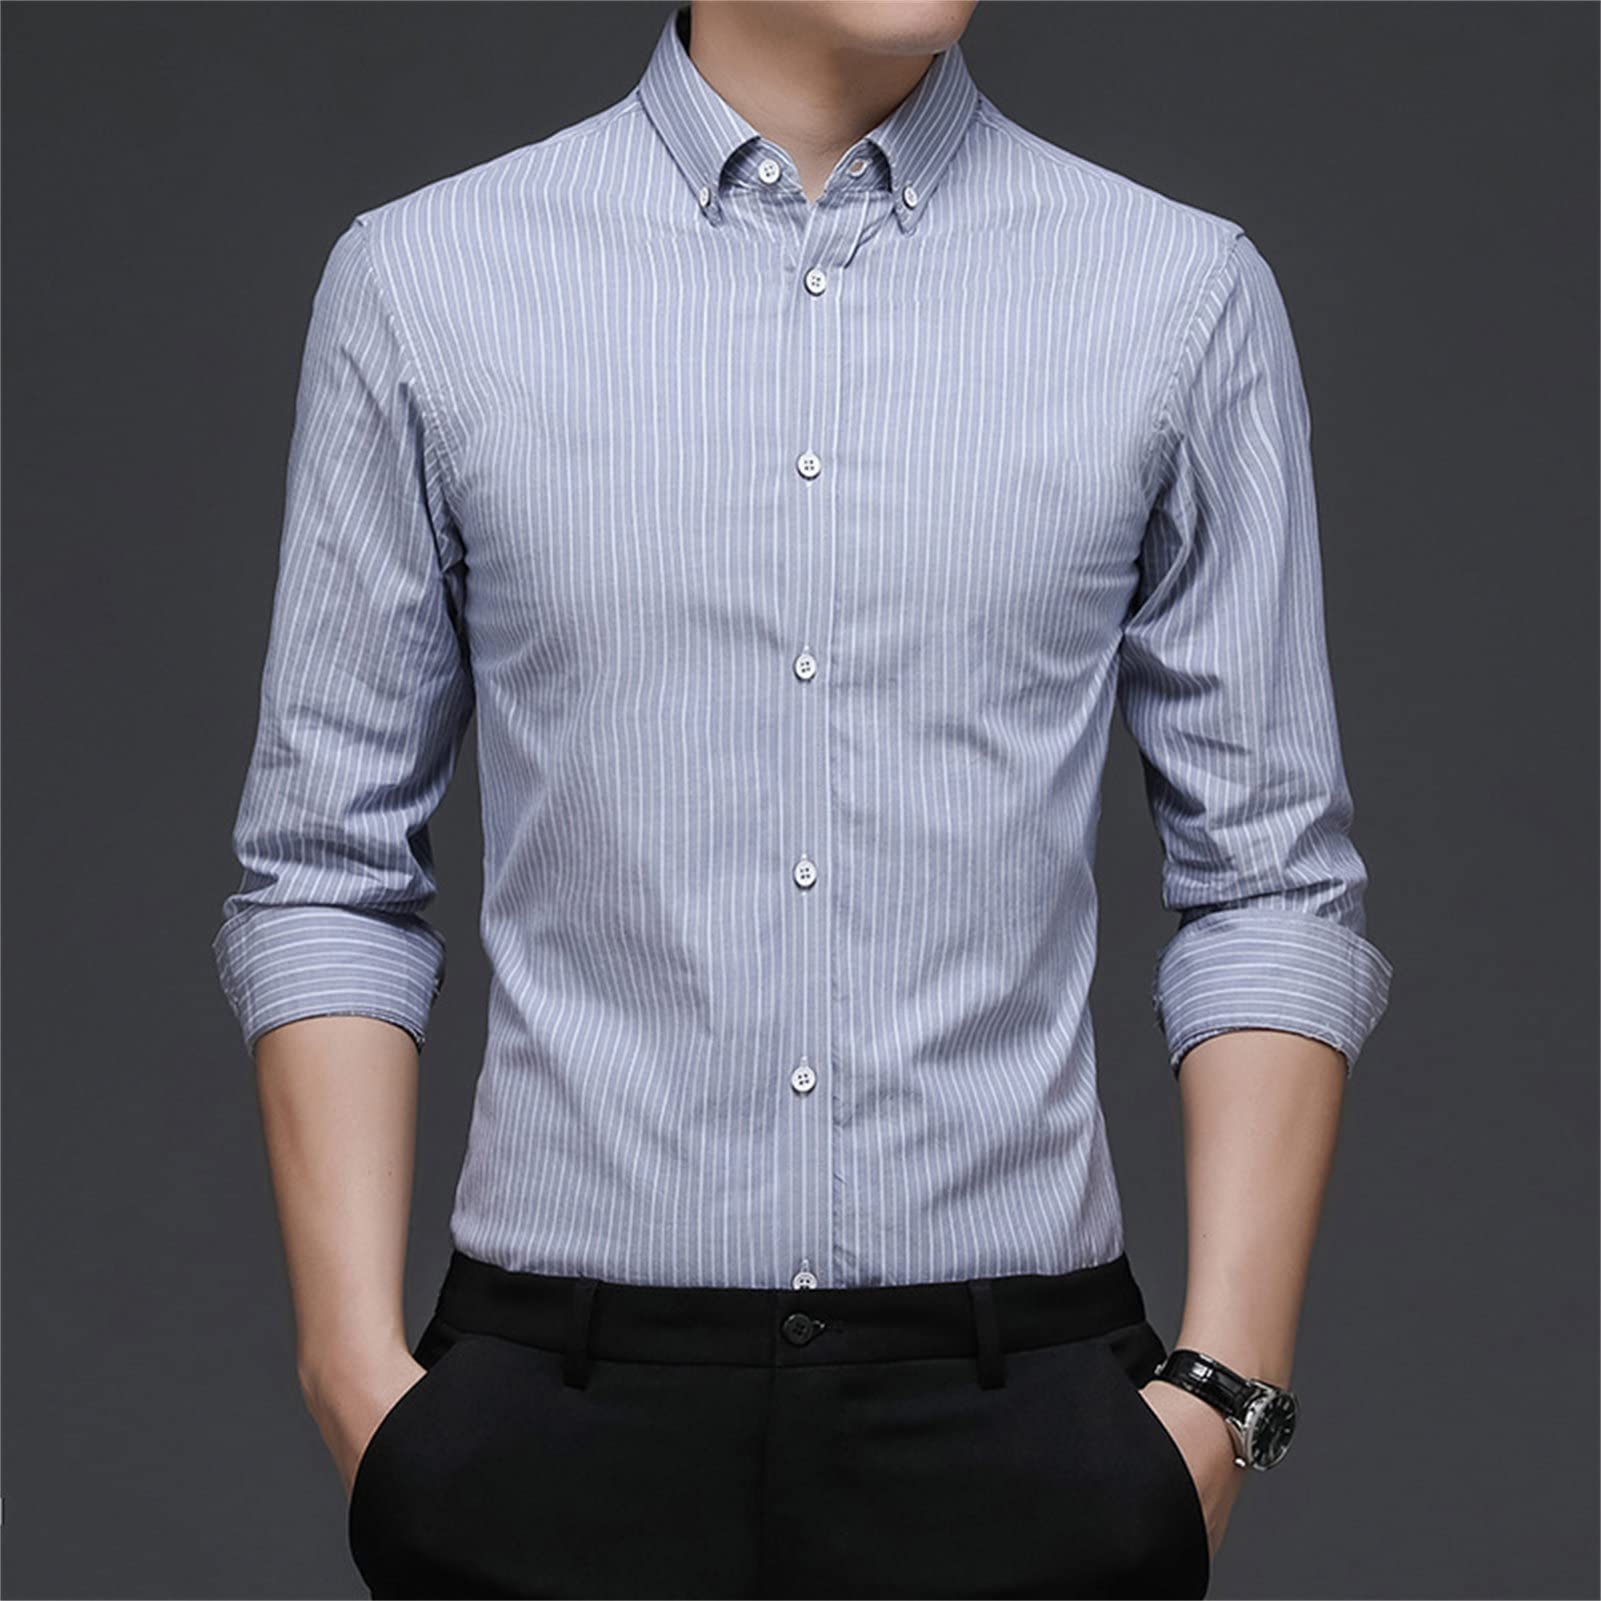 Maiyifu-GJ Men's Casual Striped Dress Shirt Turn-Down Collar Button Down Business Shirts Solid Slim Fit Long Sleeve Shirts (Grey,170)